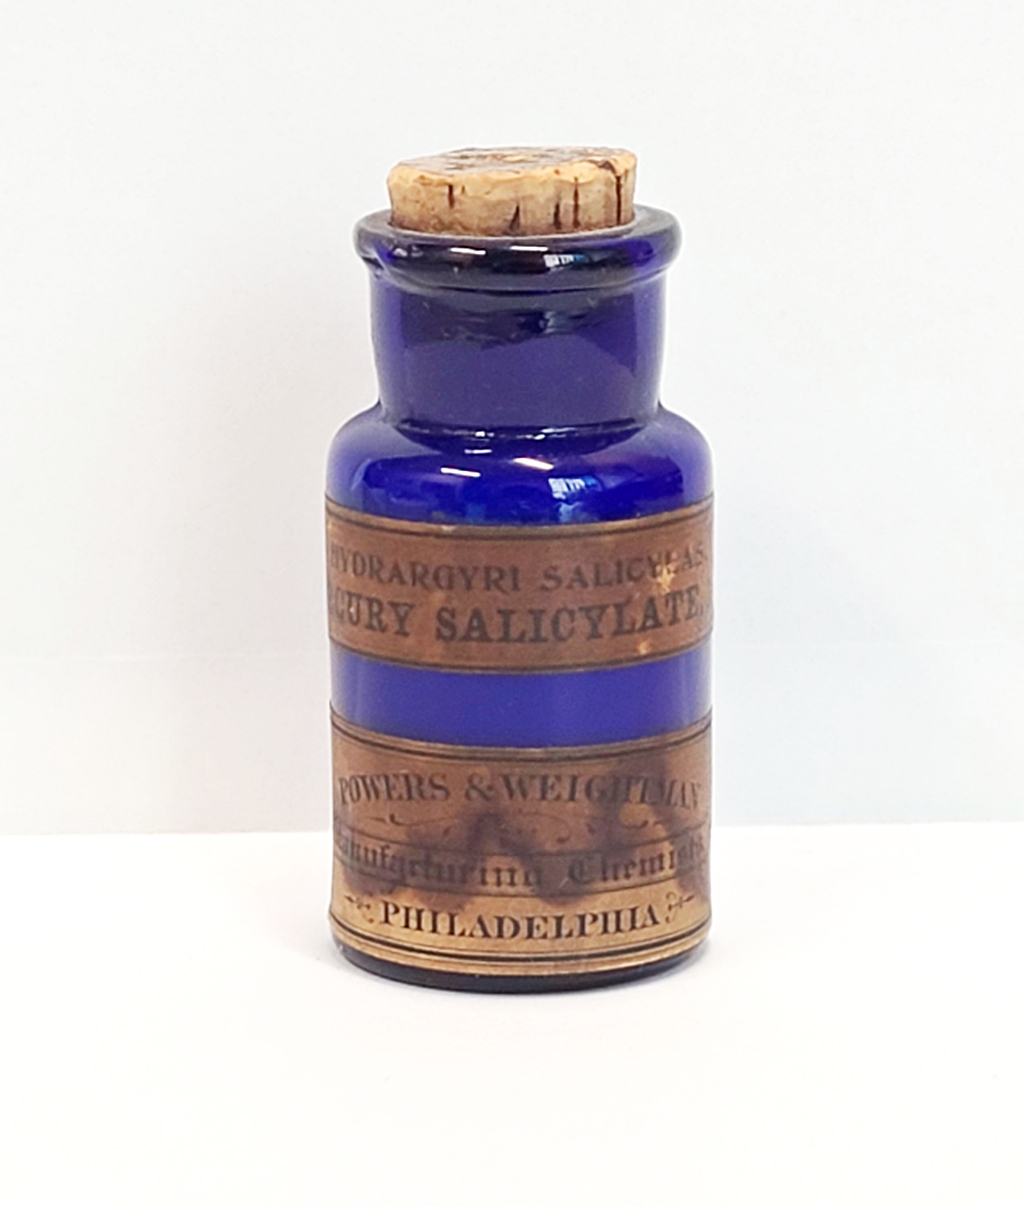 A blue bottle displays a label reading "mercury salicylate"